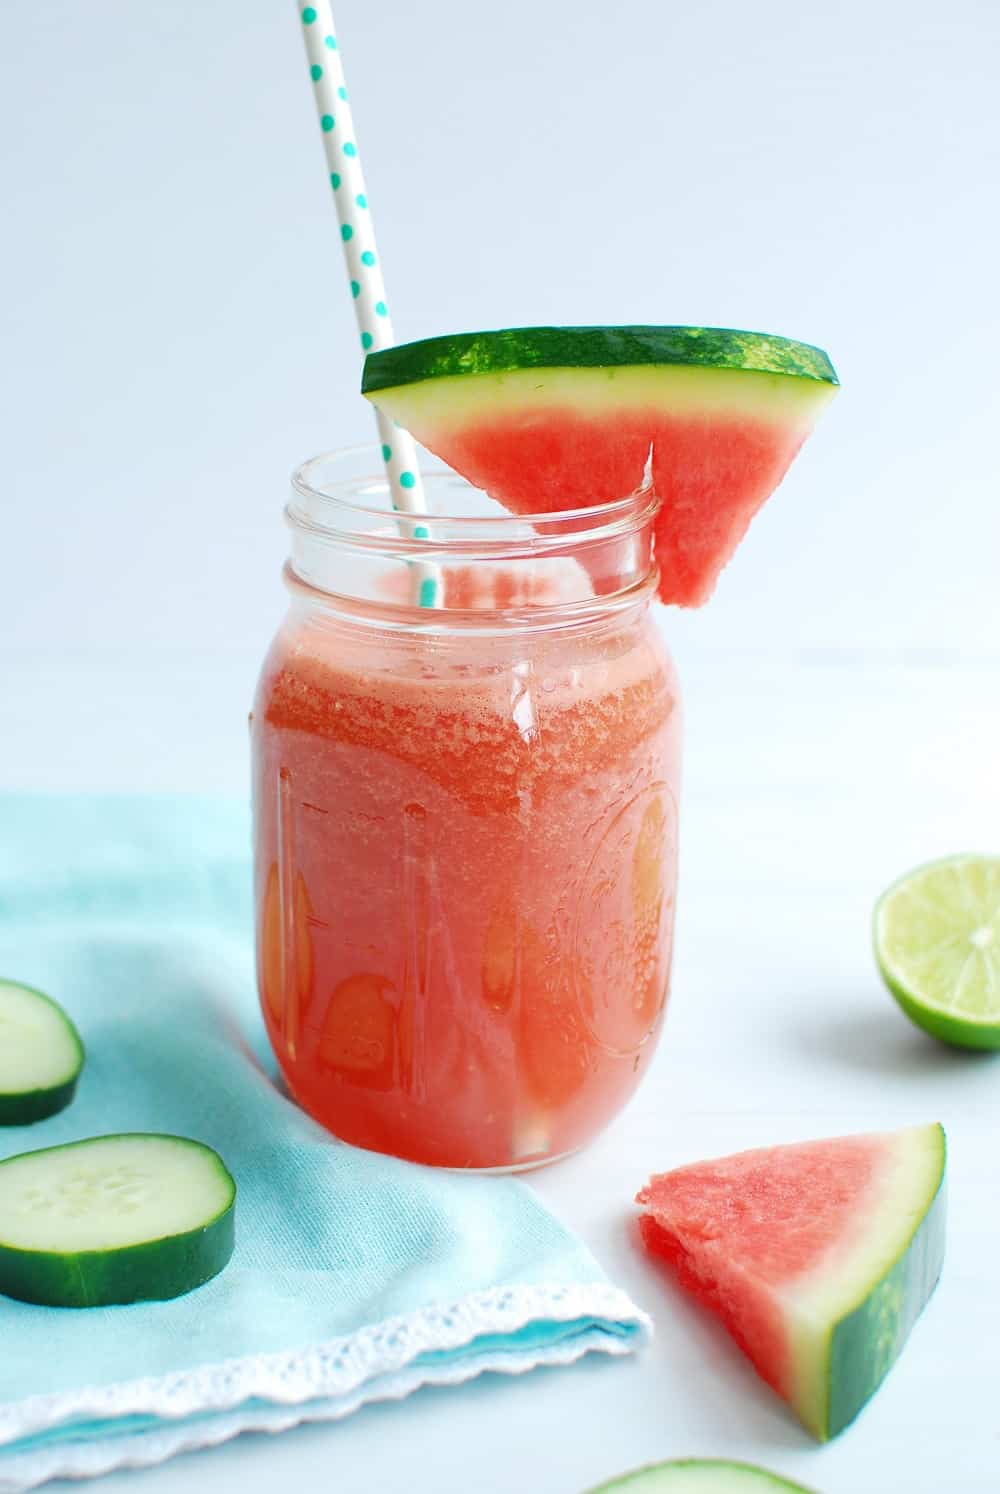 Mason jar full of cucumber watermelon smoothie